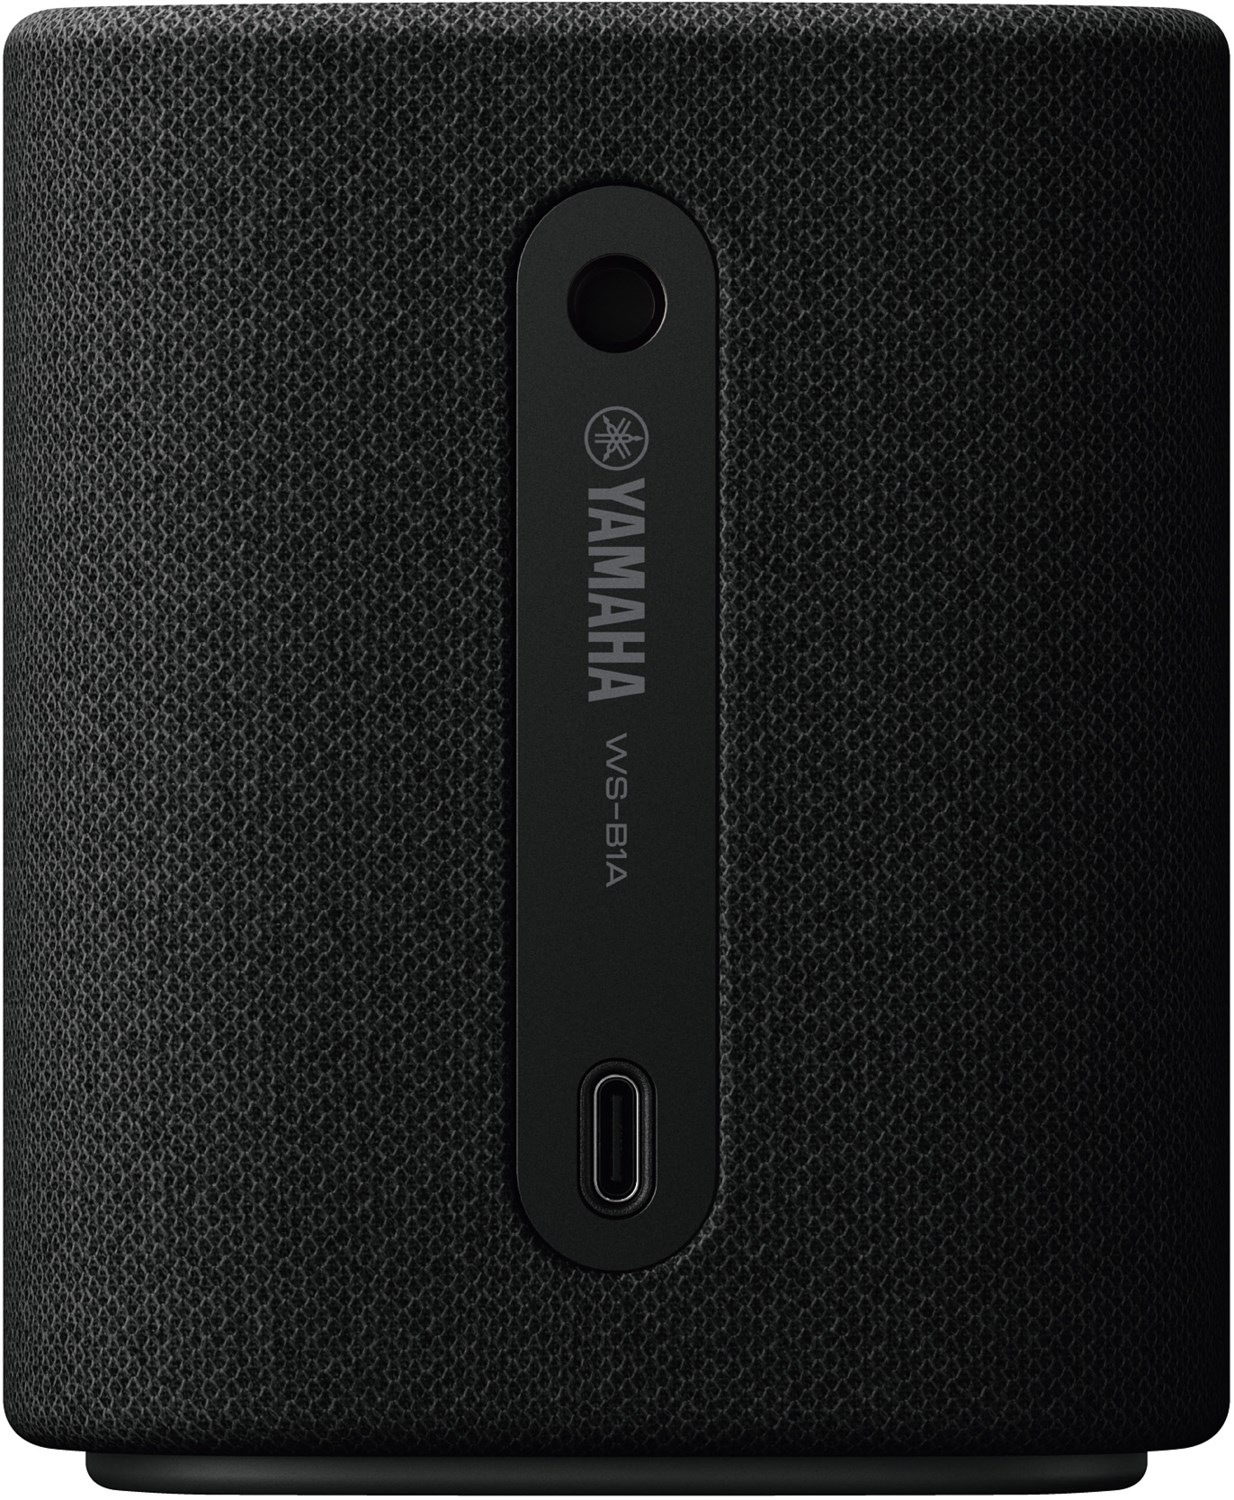 Yamaha WS-B1A drahtloser Bluetooth-Lautsprecher black